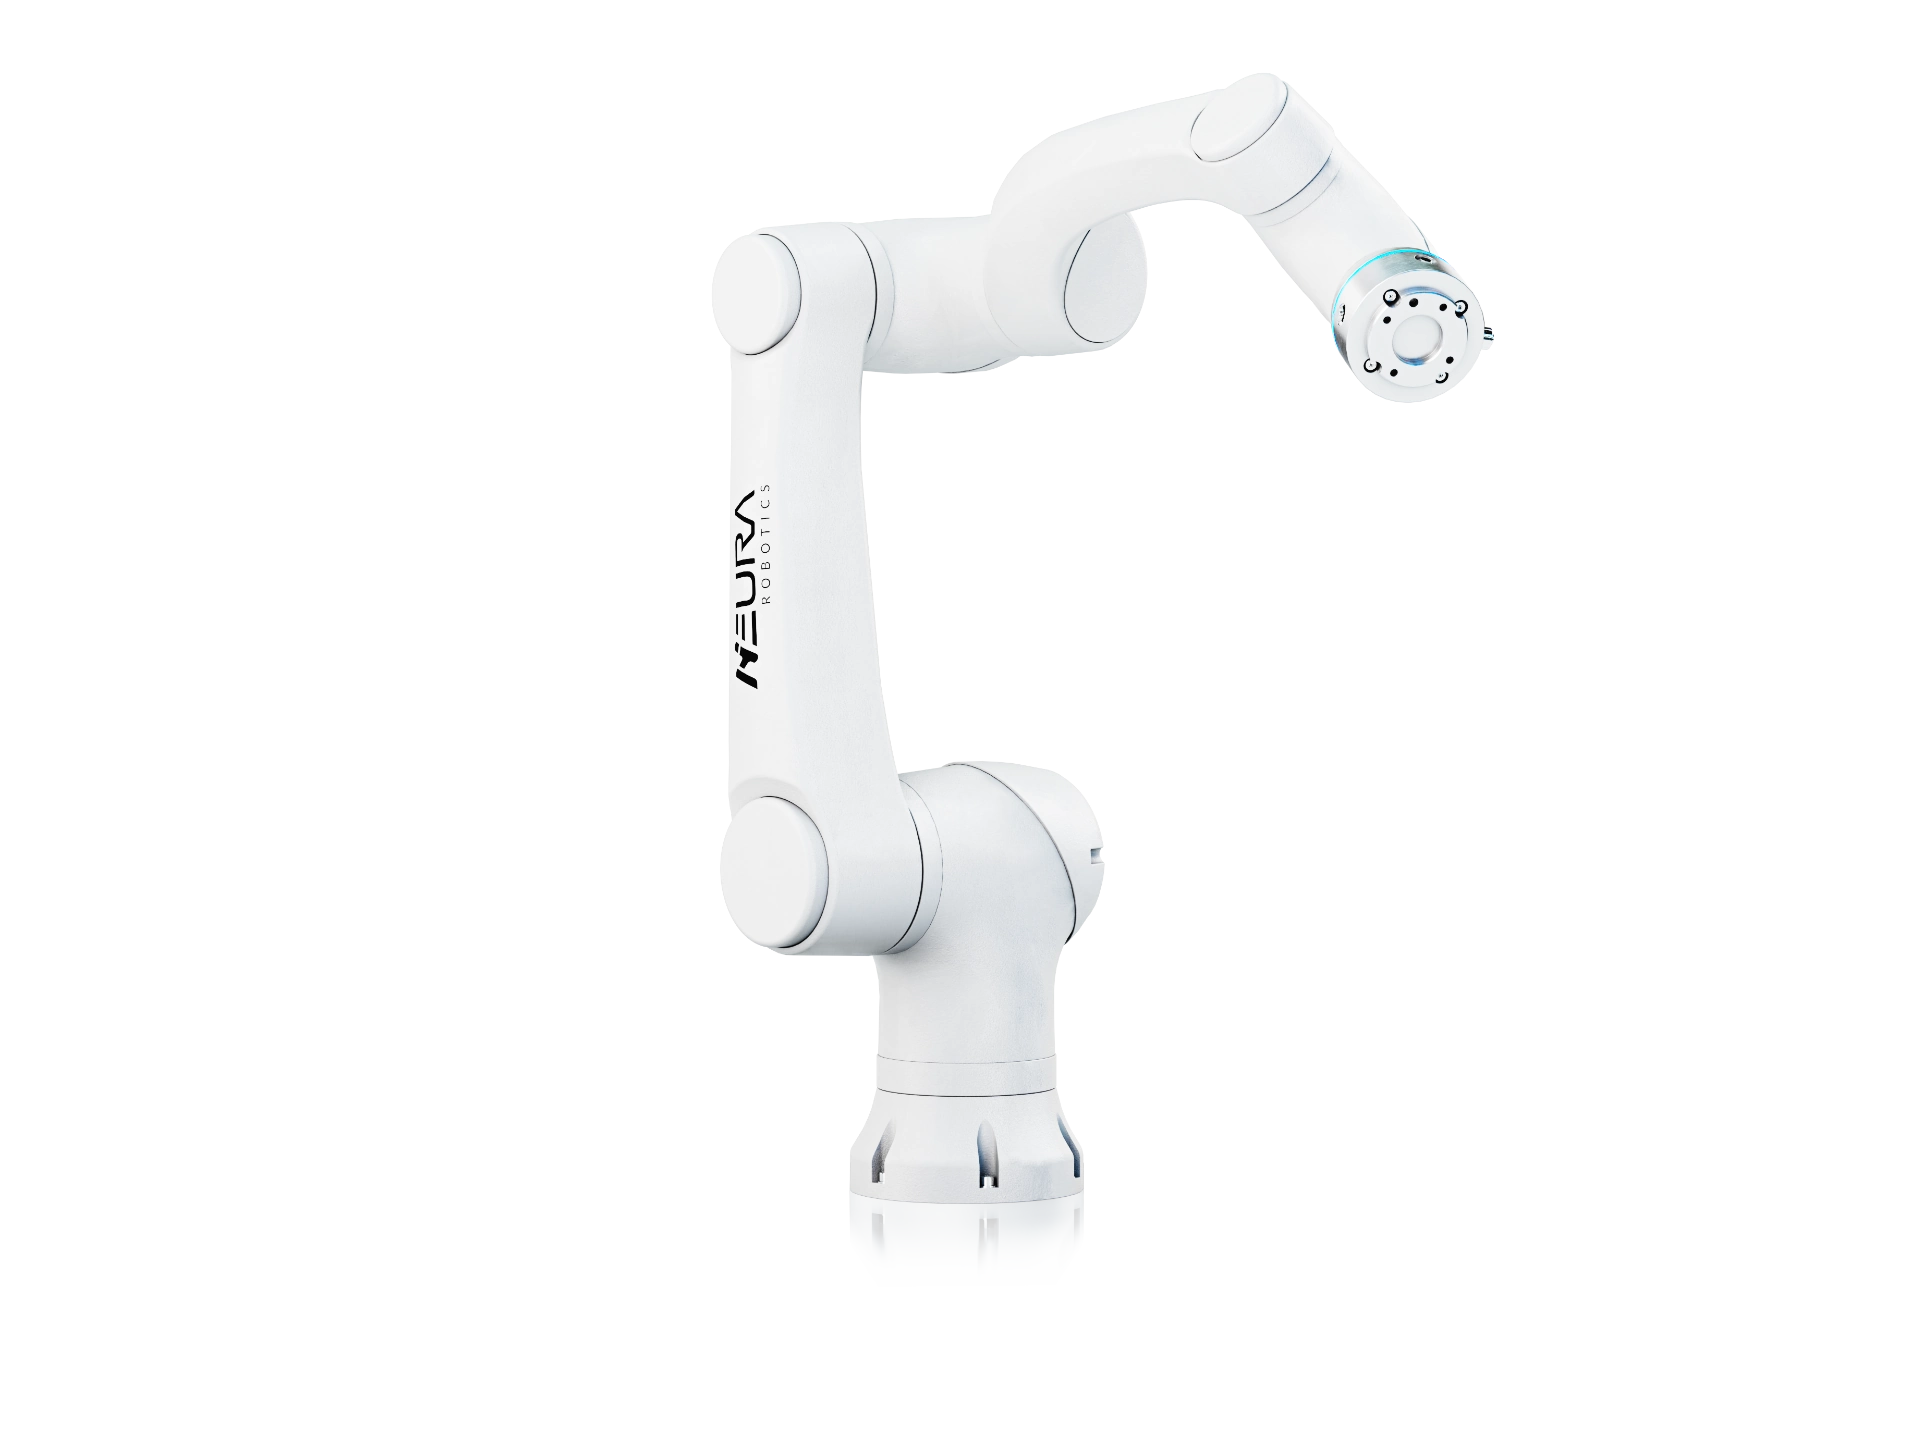 LARA Lightweight Agile Robotic Assistant. Performance meets cost efficiency.